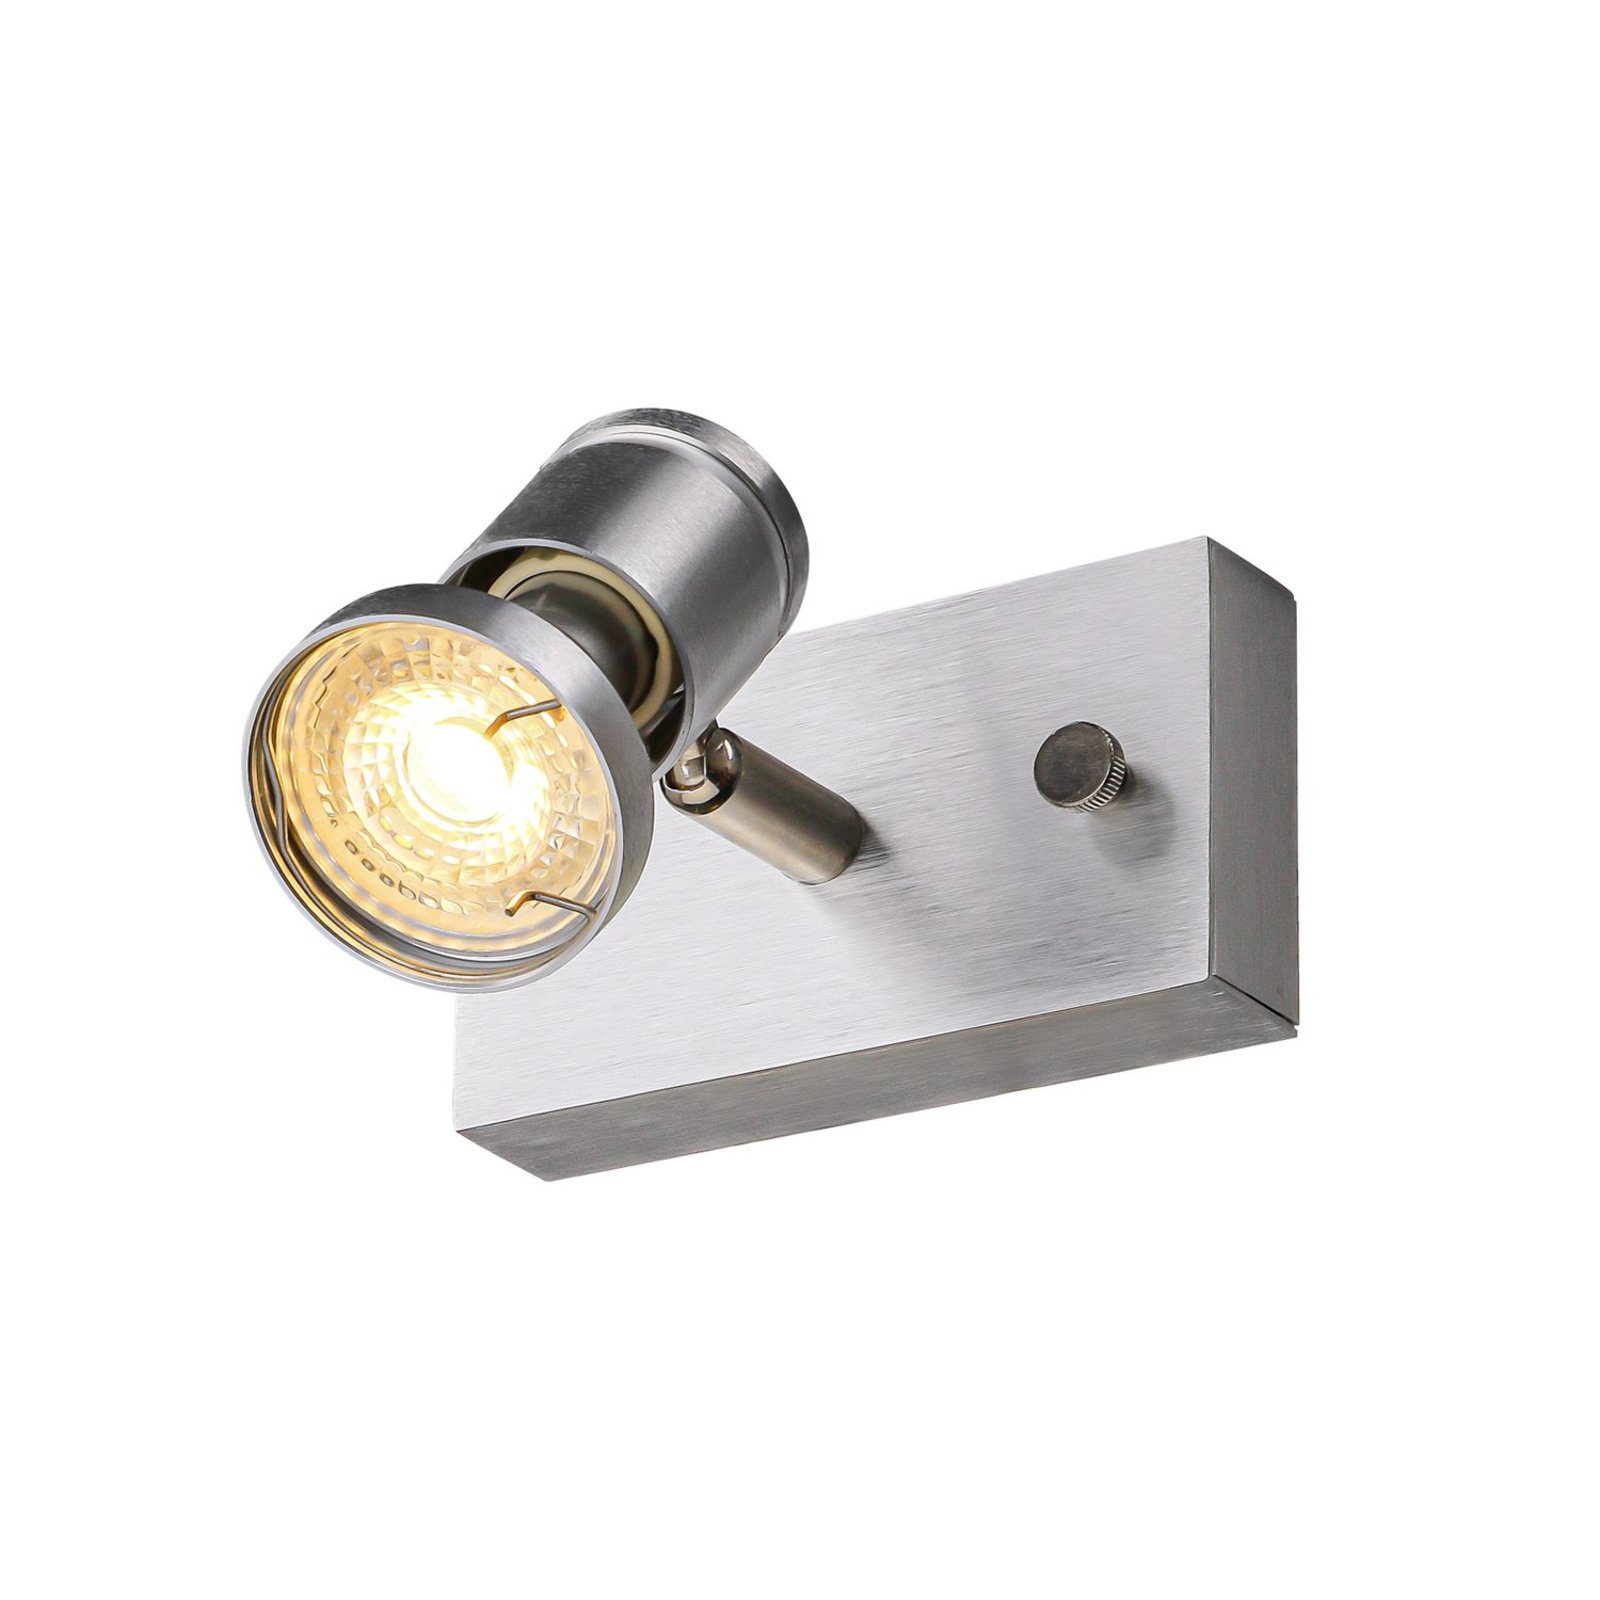 SLV Asto 1-bulb downlight with decorative ring